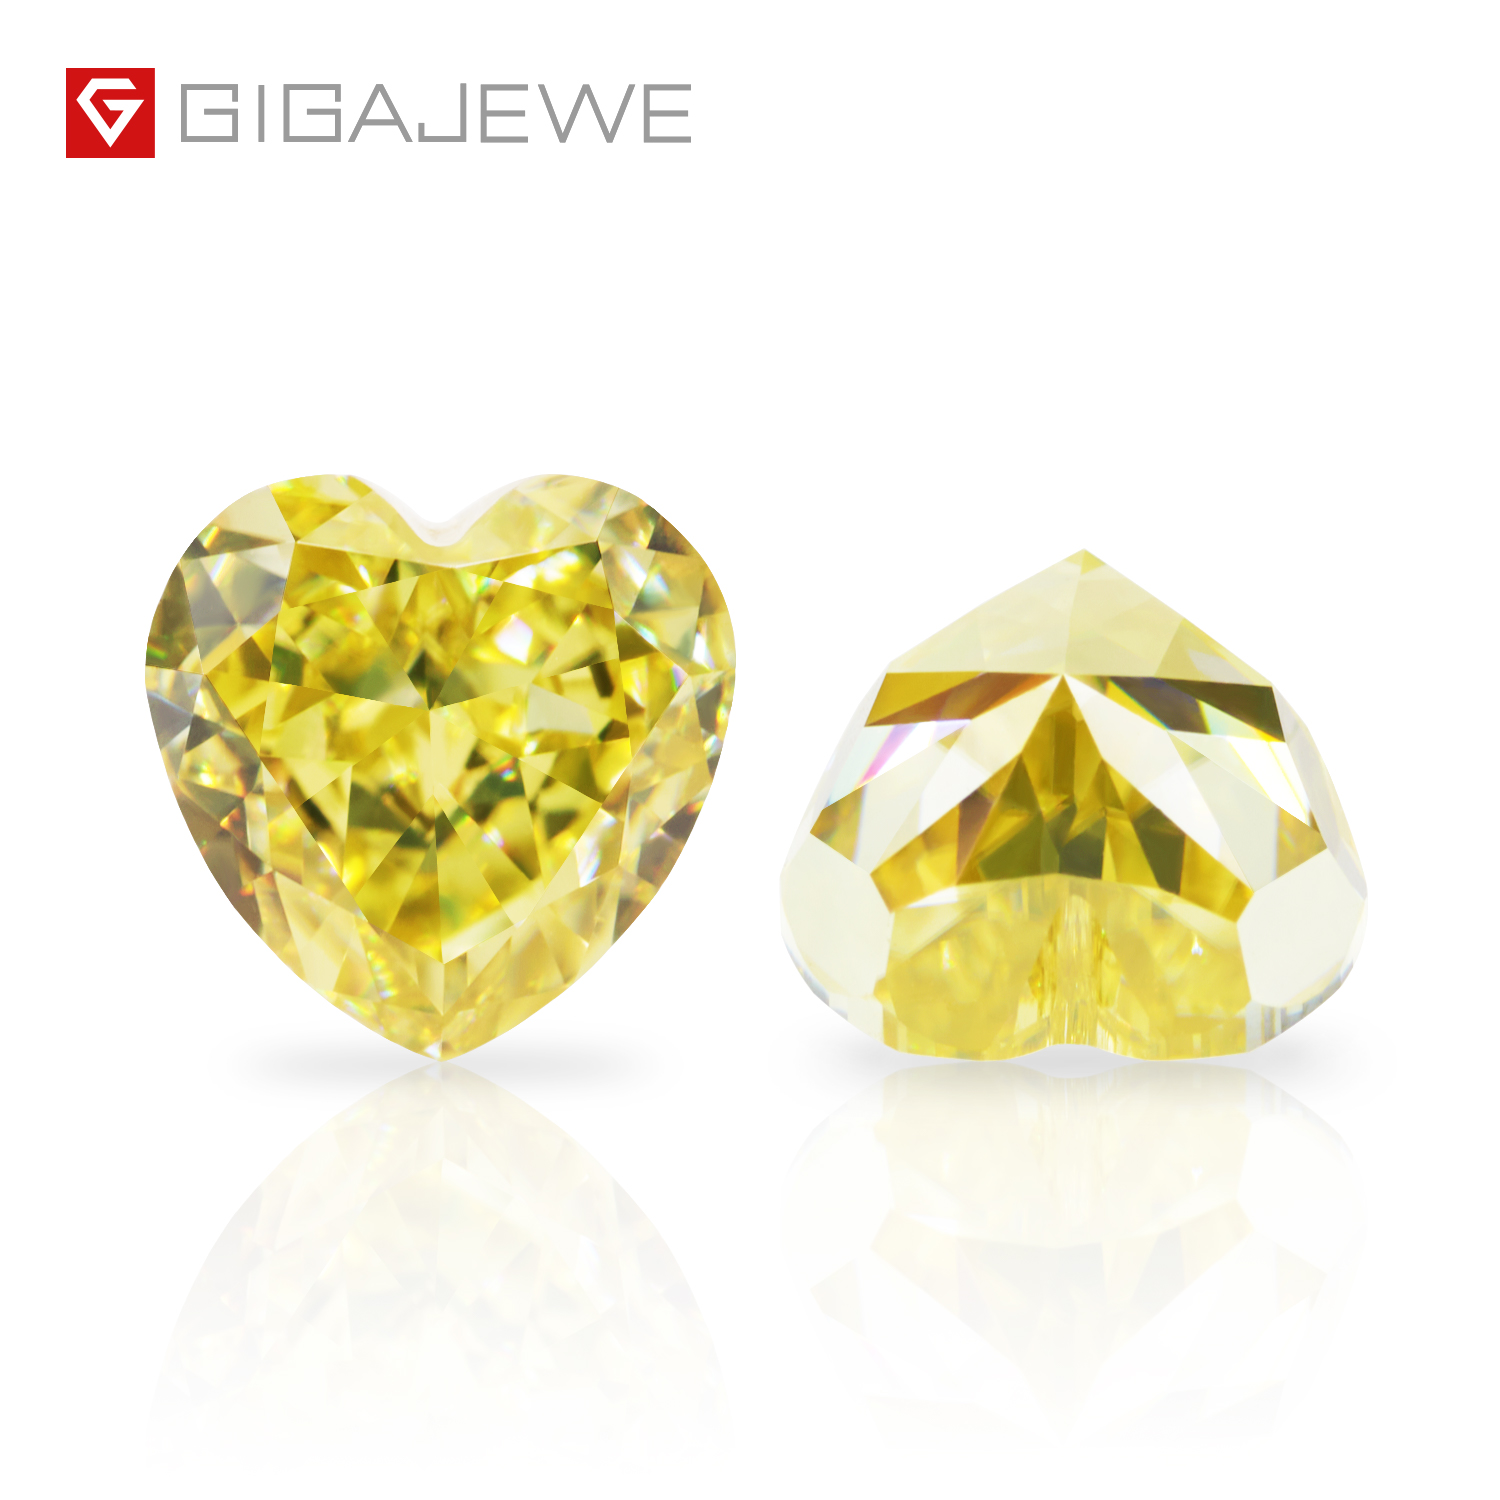 GIGAJEWE 定制碎冰心形切割鲜艳黄色 VVS1 莫桑石裸钻测试通过宝石首饰制作